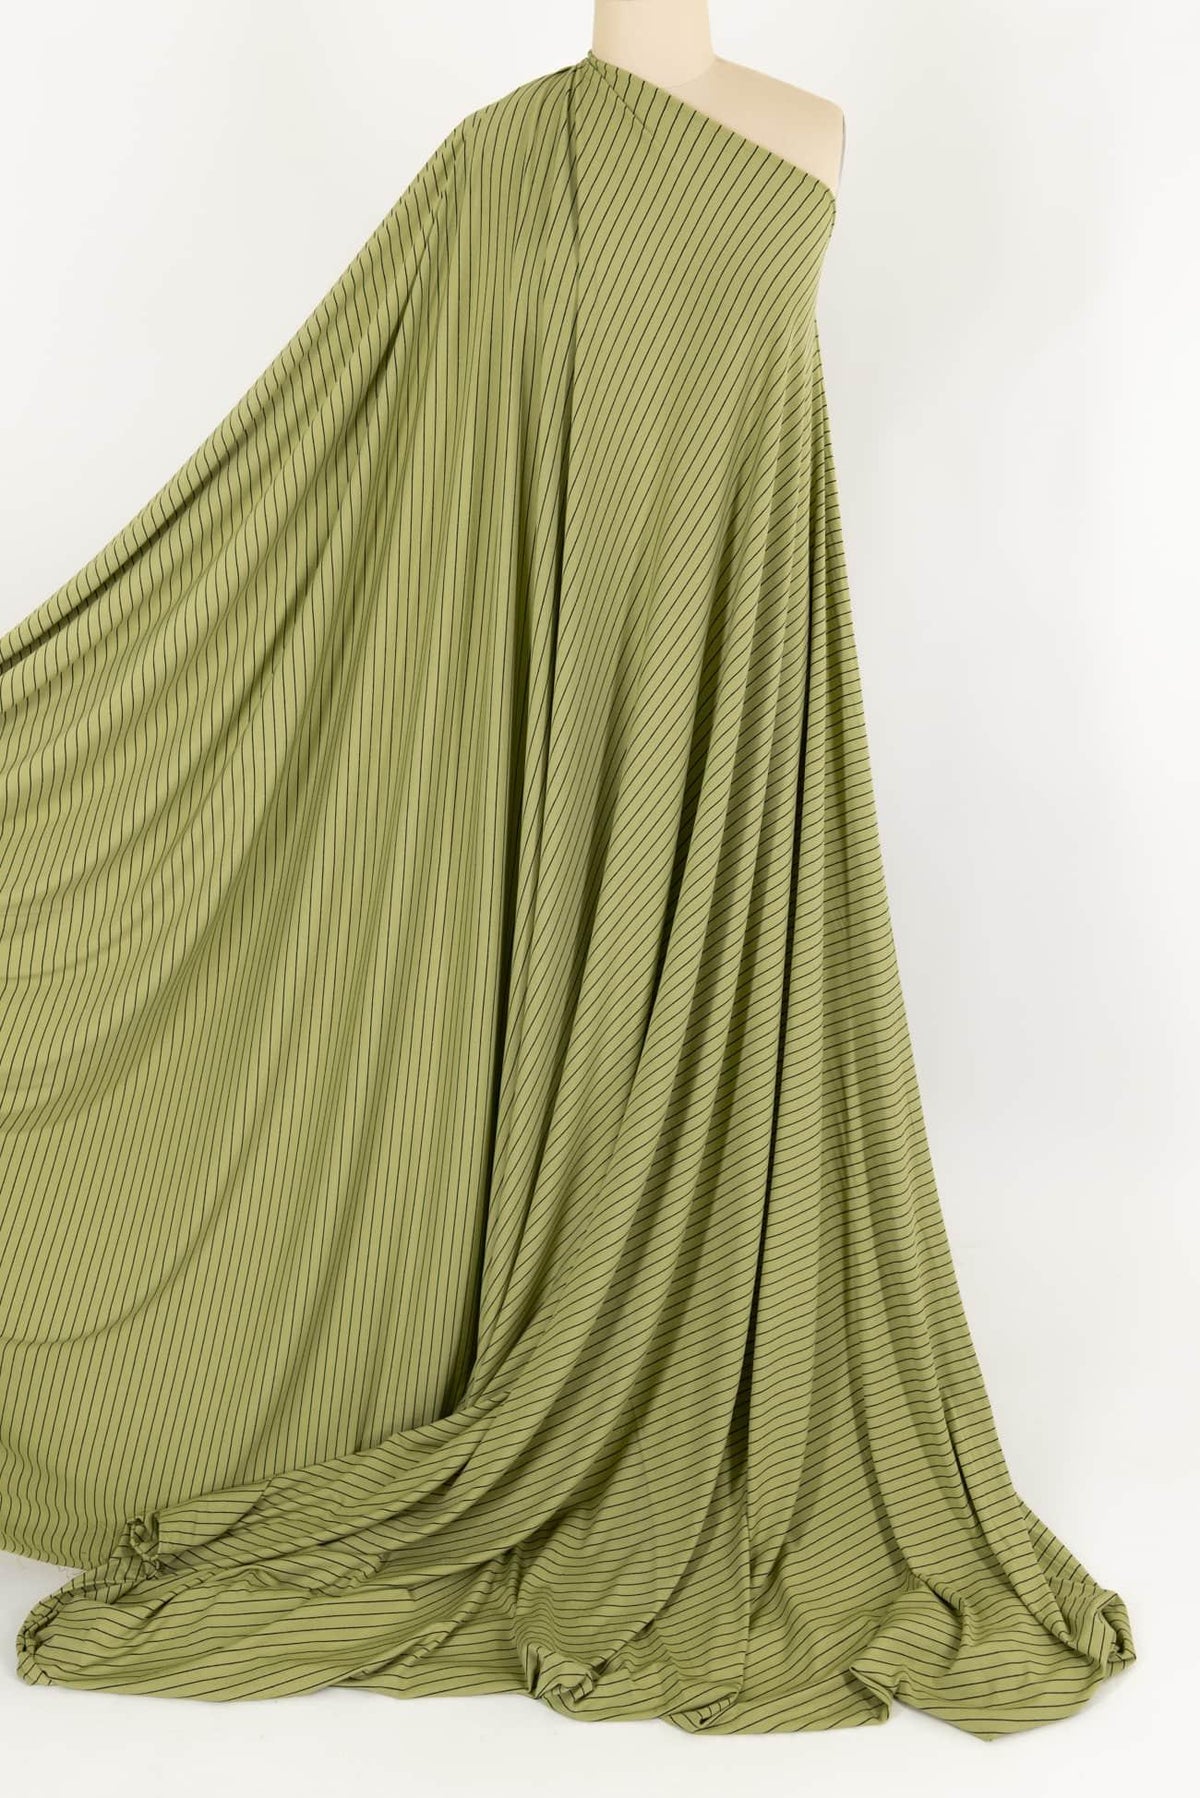 Laurel Stripe USA Knit - Marcy Tilton Fabrics